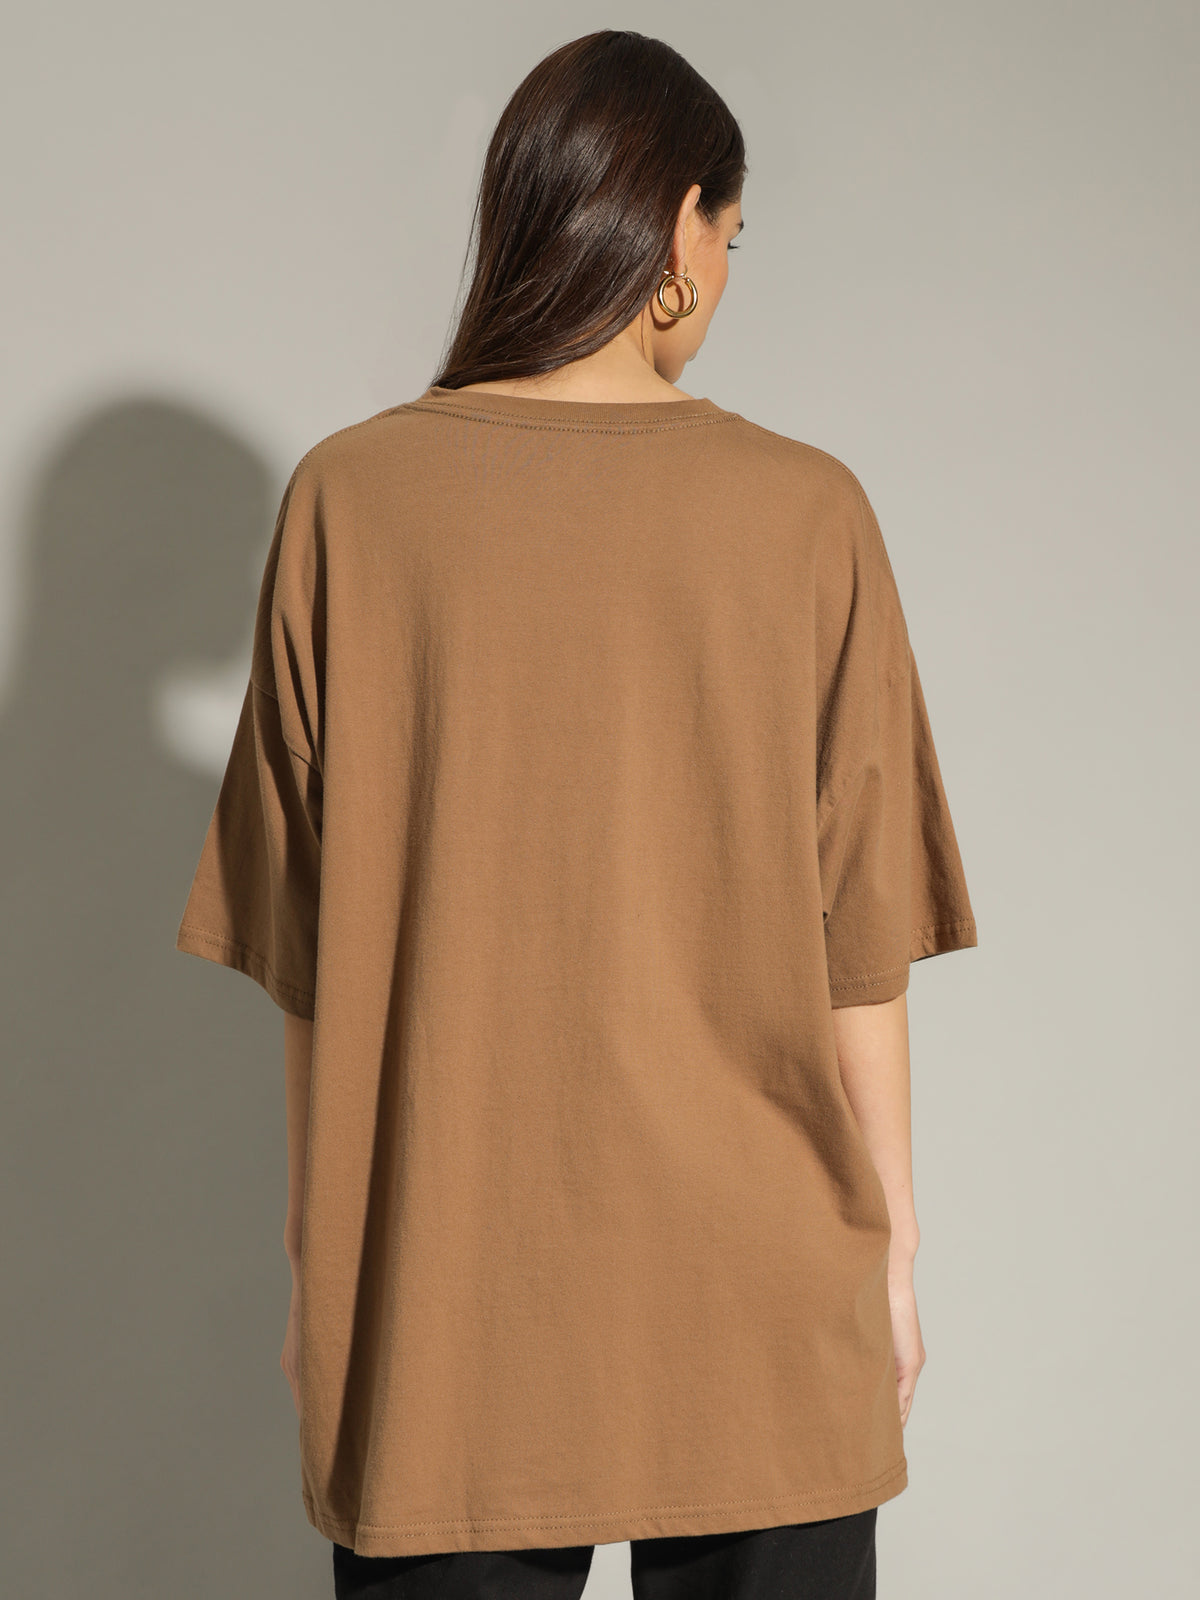 Mills Basic Short Sleeve T-Shirt in Brown